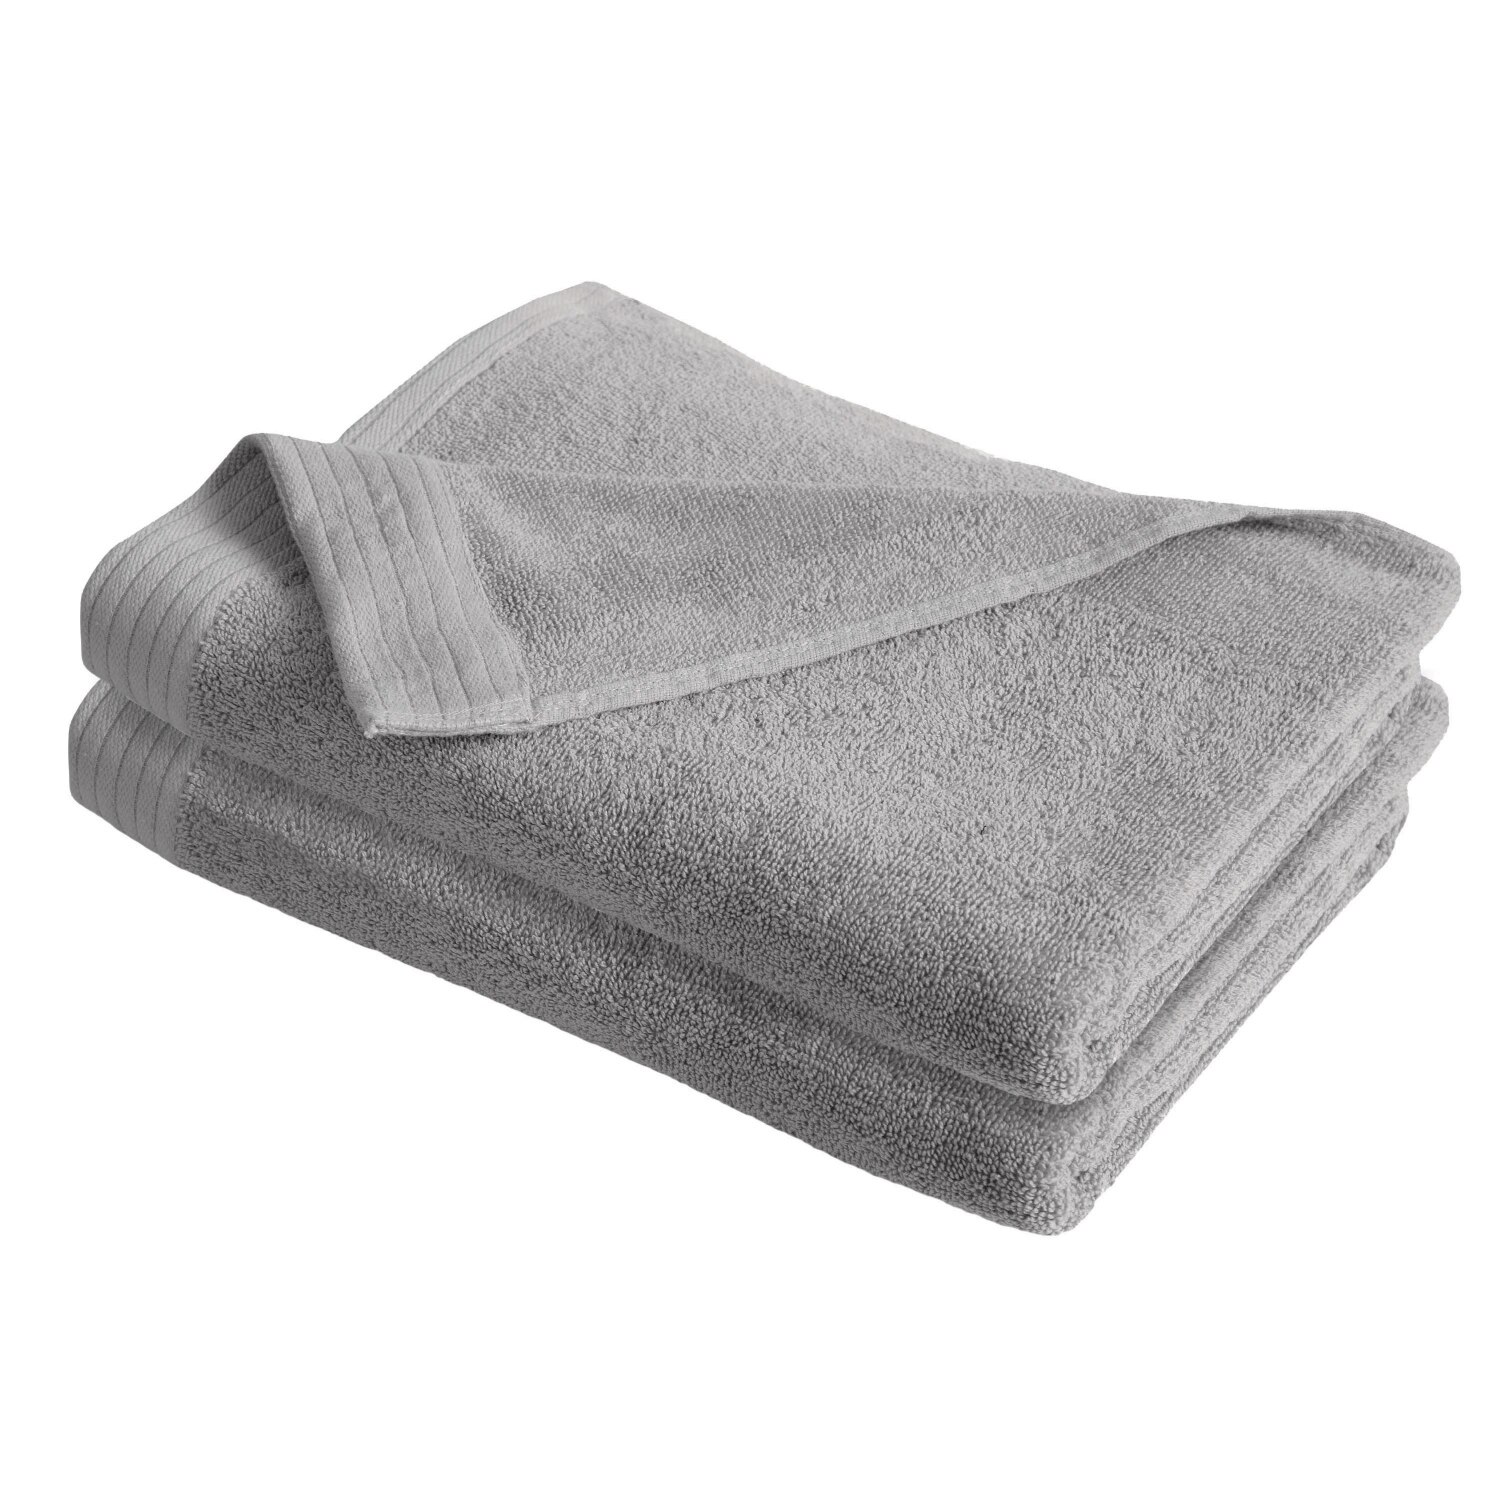 IZOD Everyday Gray 4 Pack Bath Towels